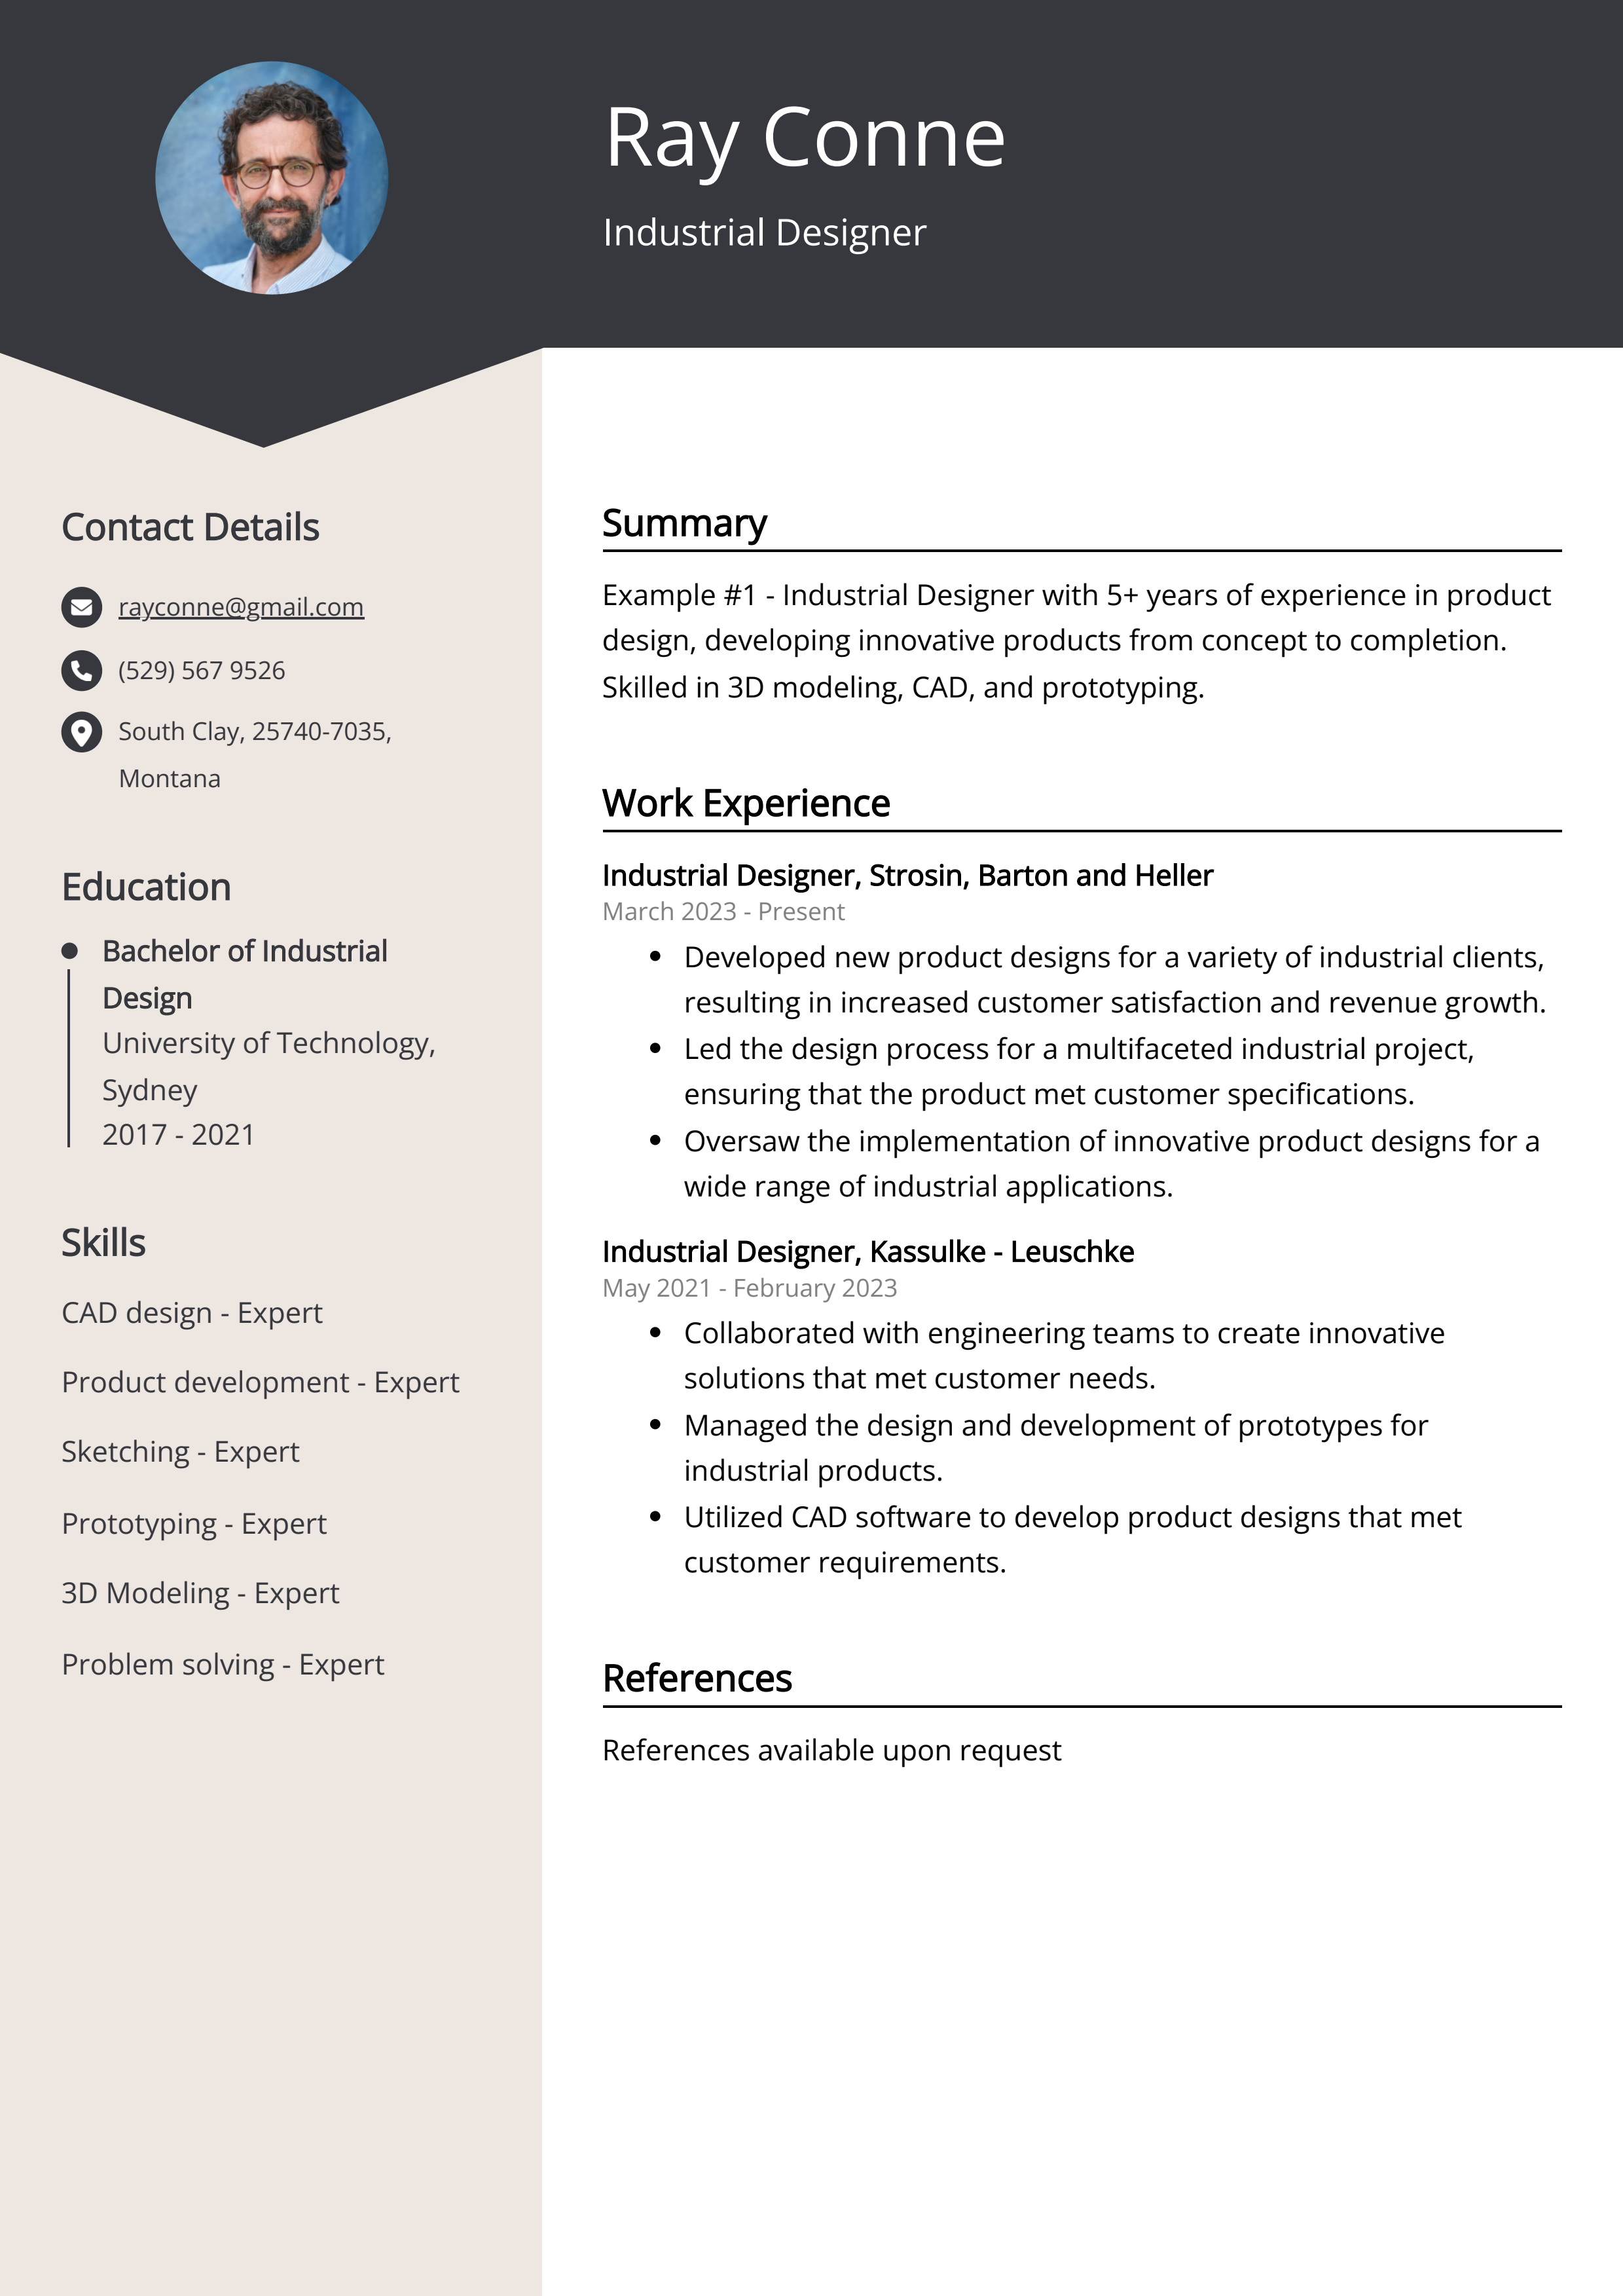 Industrial Designer CV Example